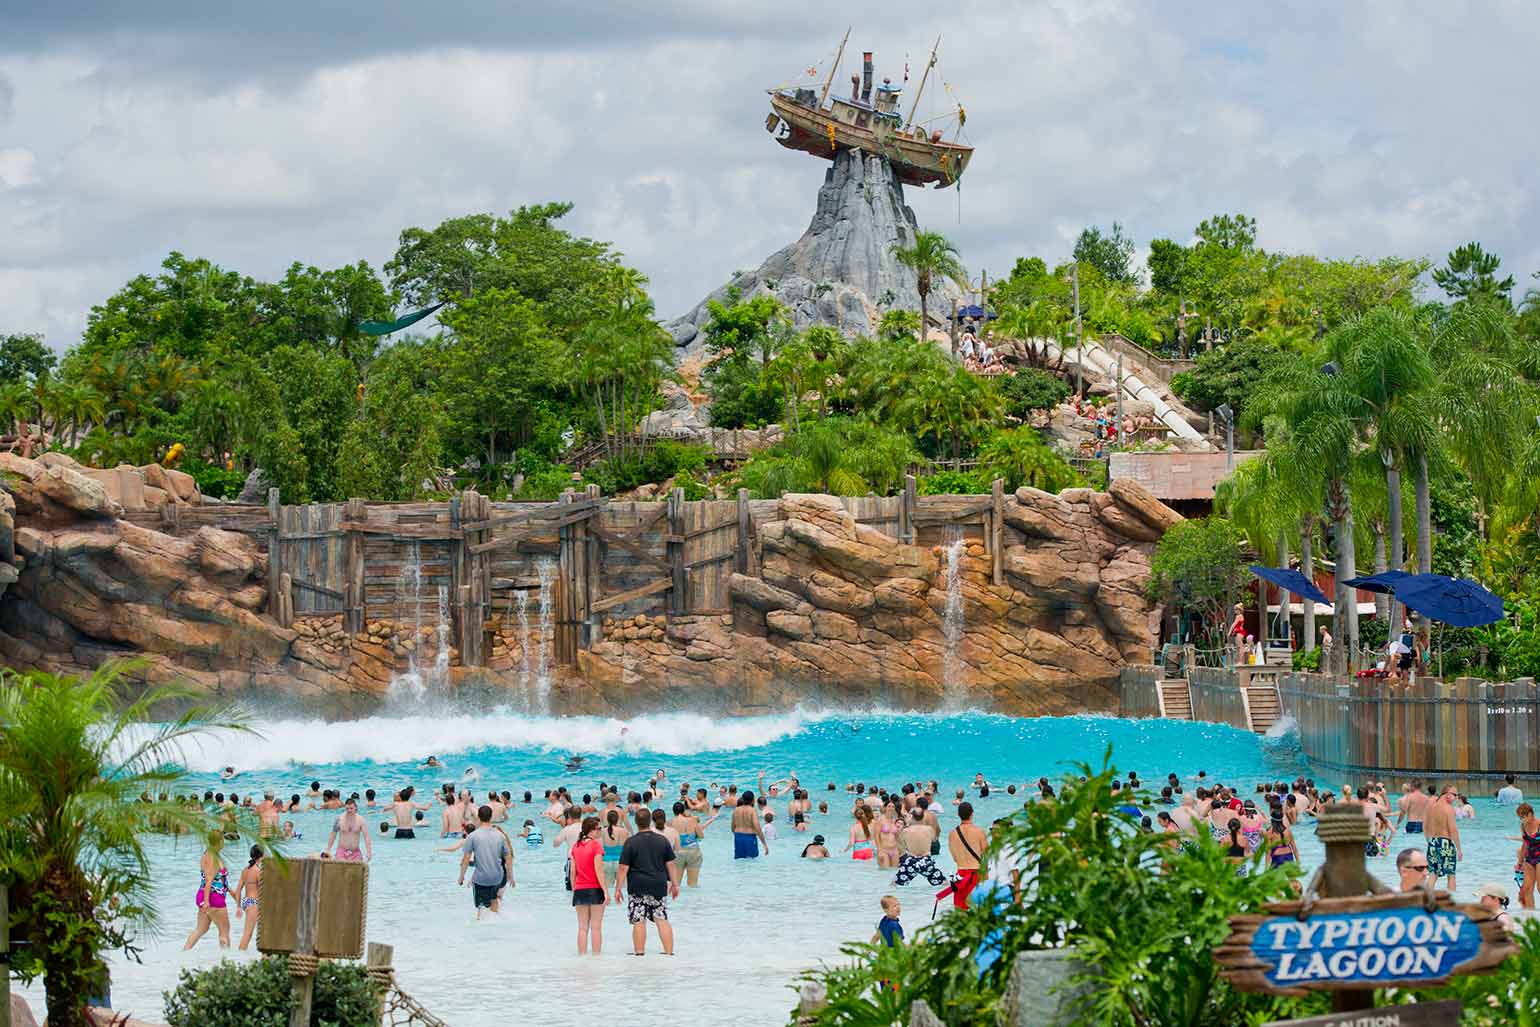 Guests splash around in the Typhoon Lagoon Surf Pool at Disney's Typhoon Lagoon Water Park.